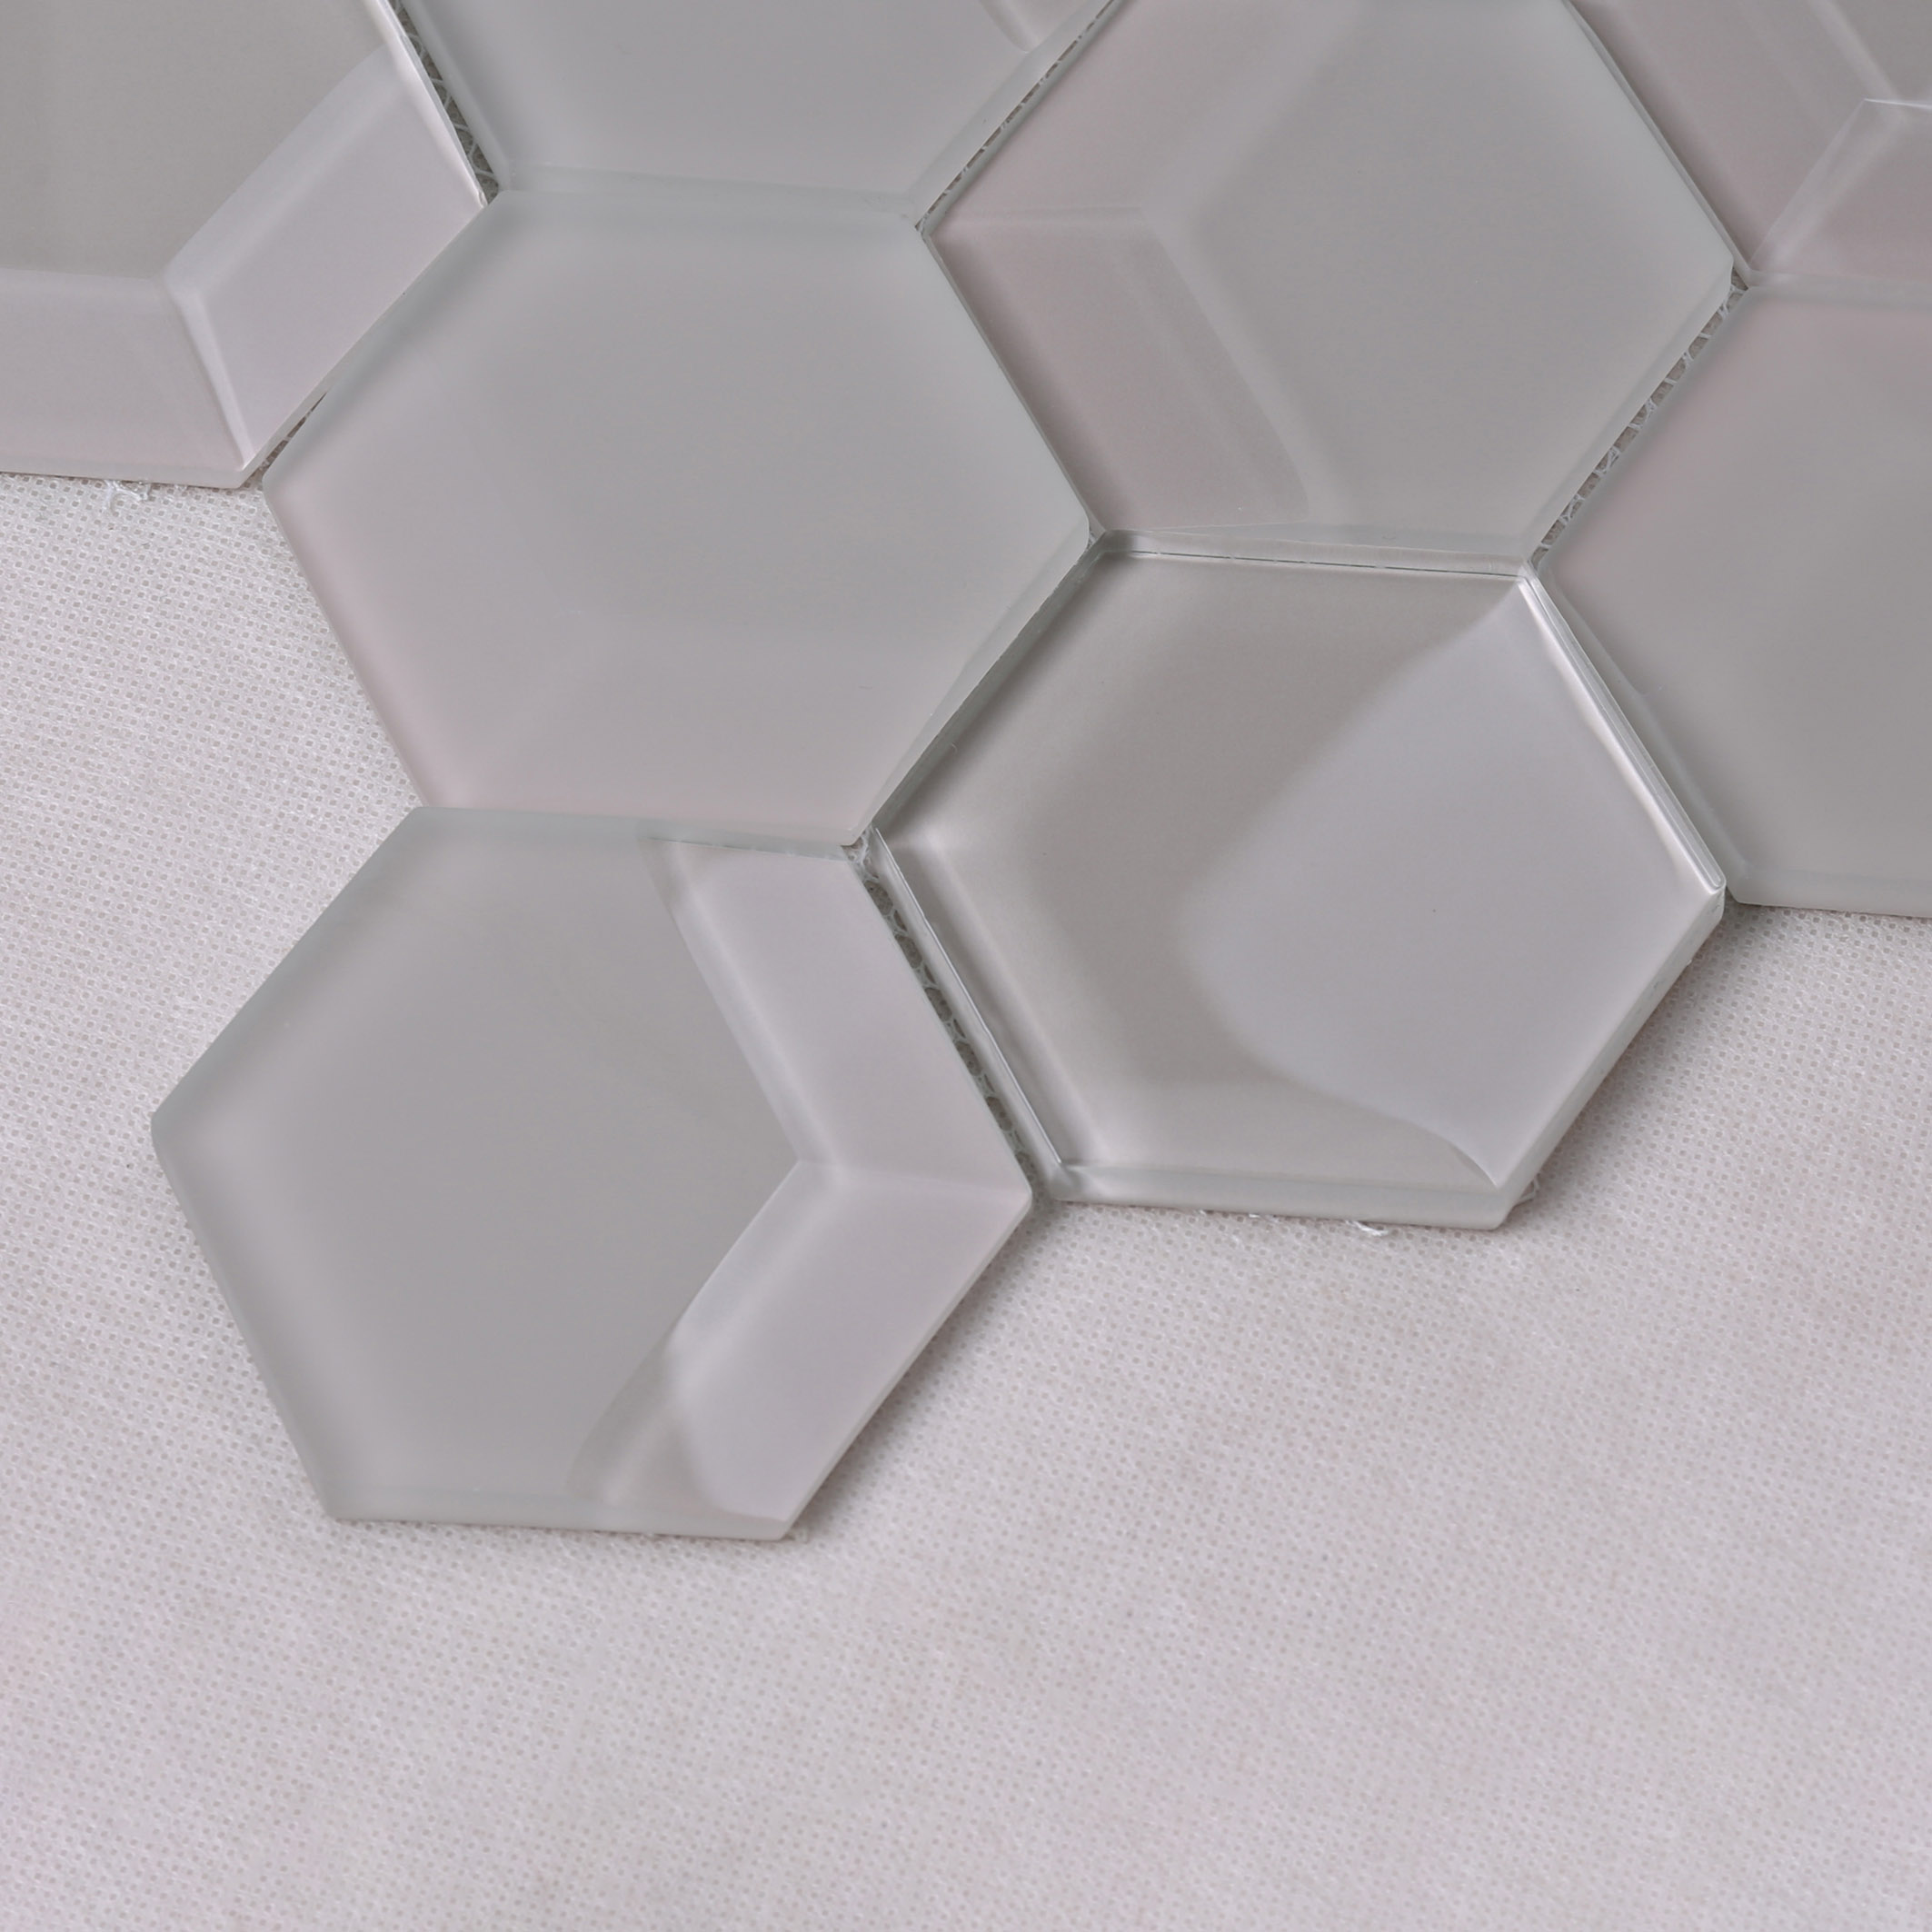 news-Heng Xing-Heng Xing printing glass metal tile wholesale for hotel-img